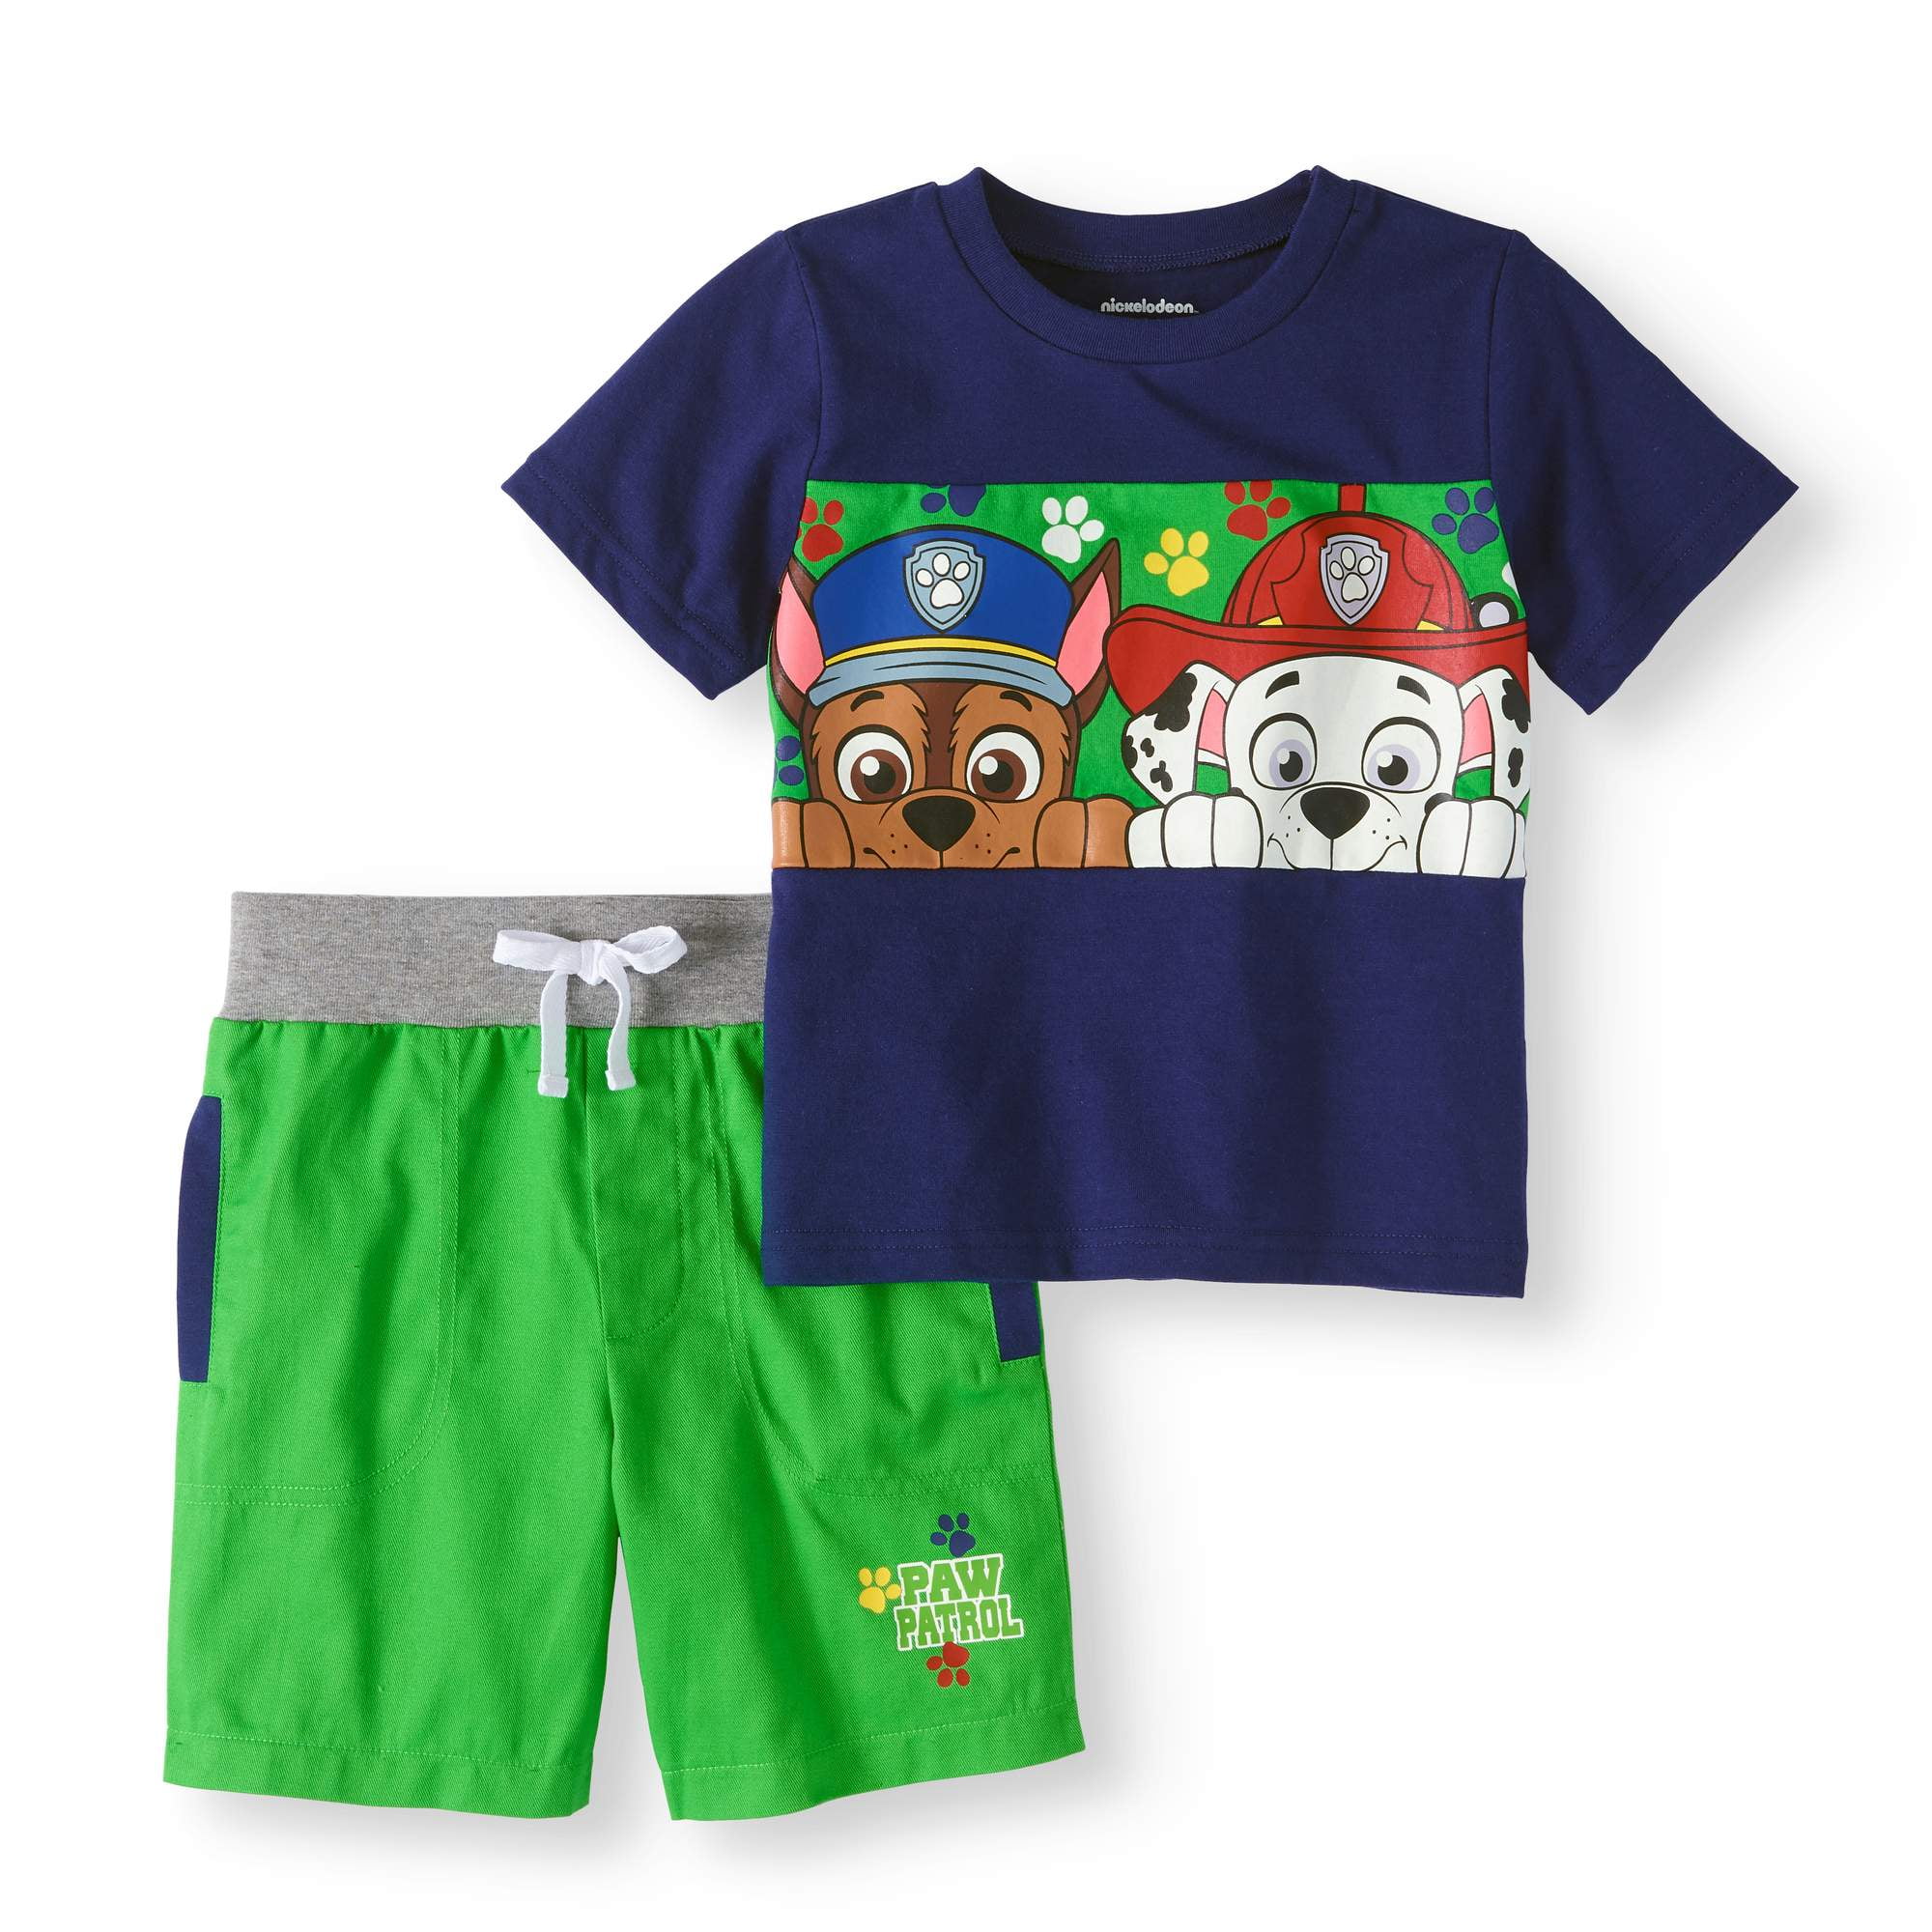 Nickelodeon Paw Patrol Boys Knit Short Set Toddler Little Boys